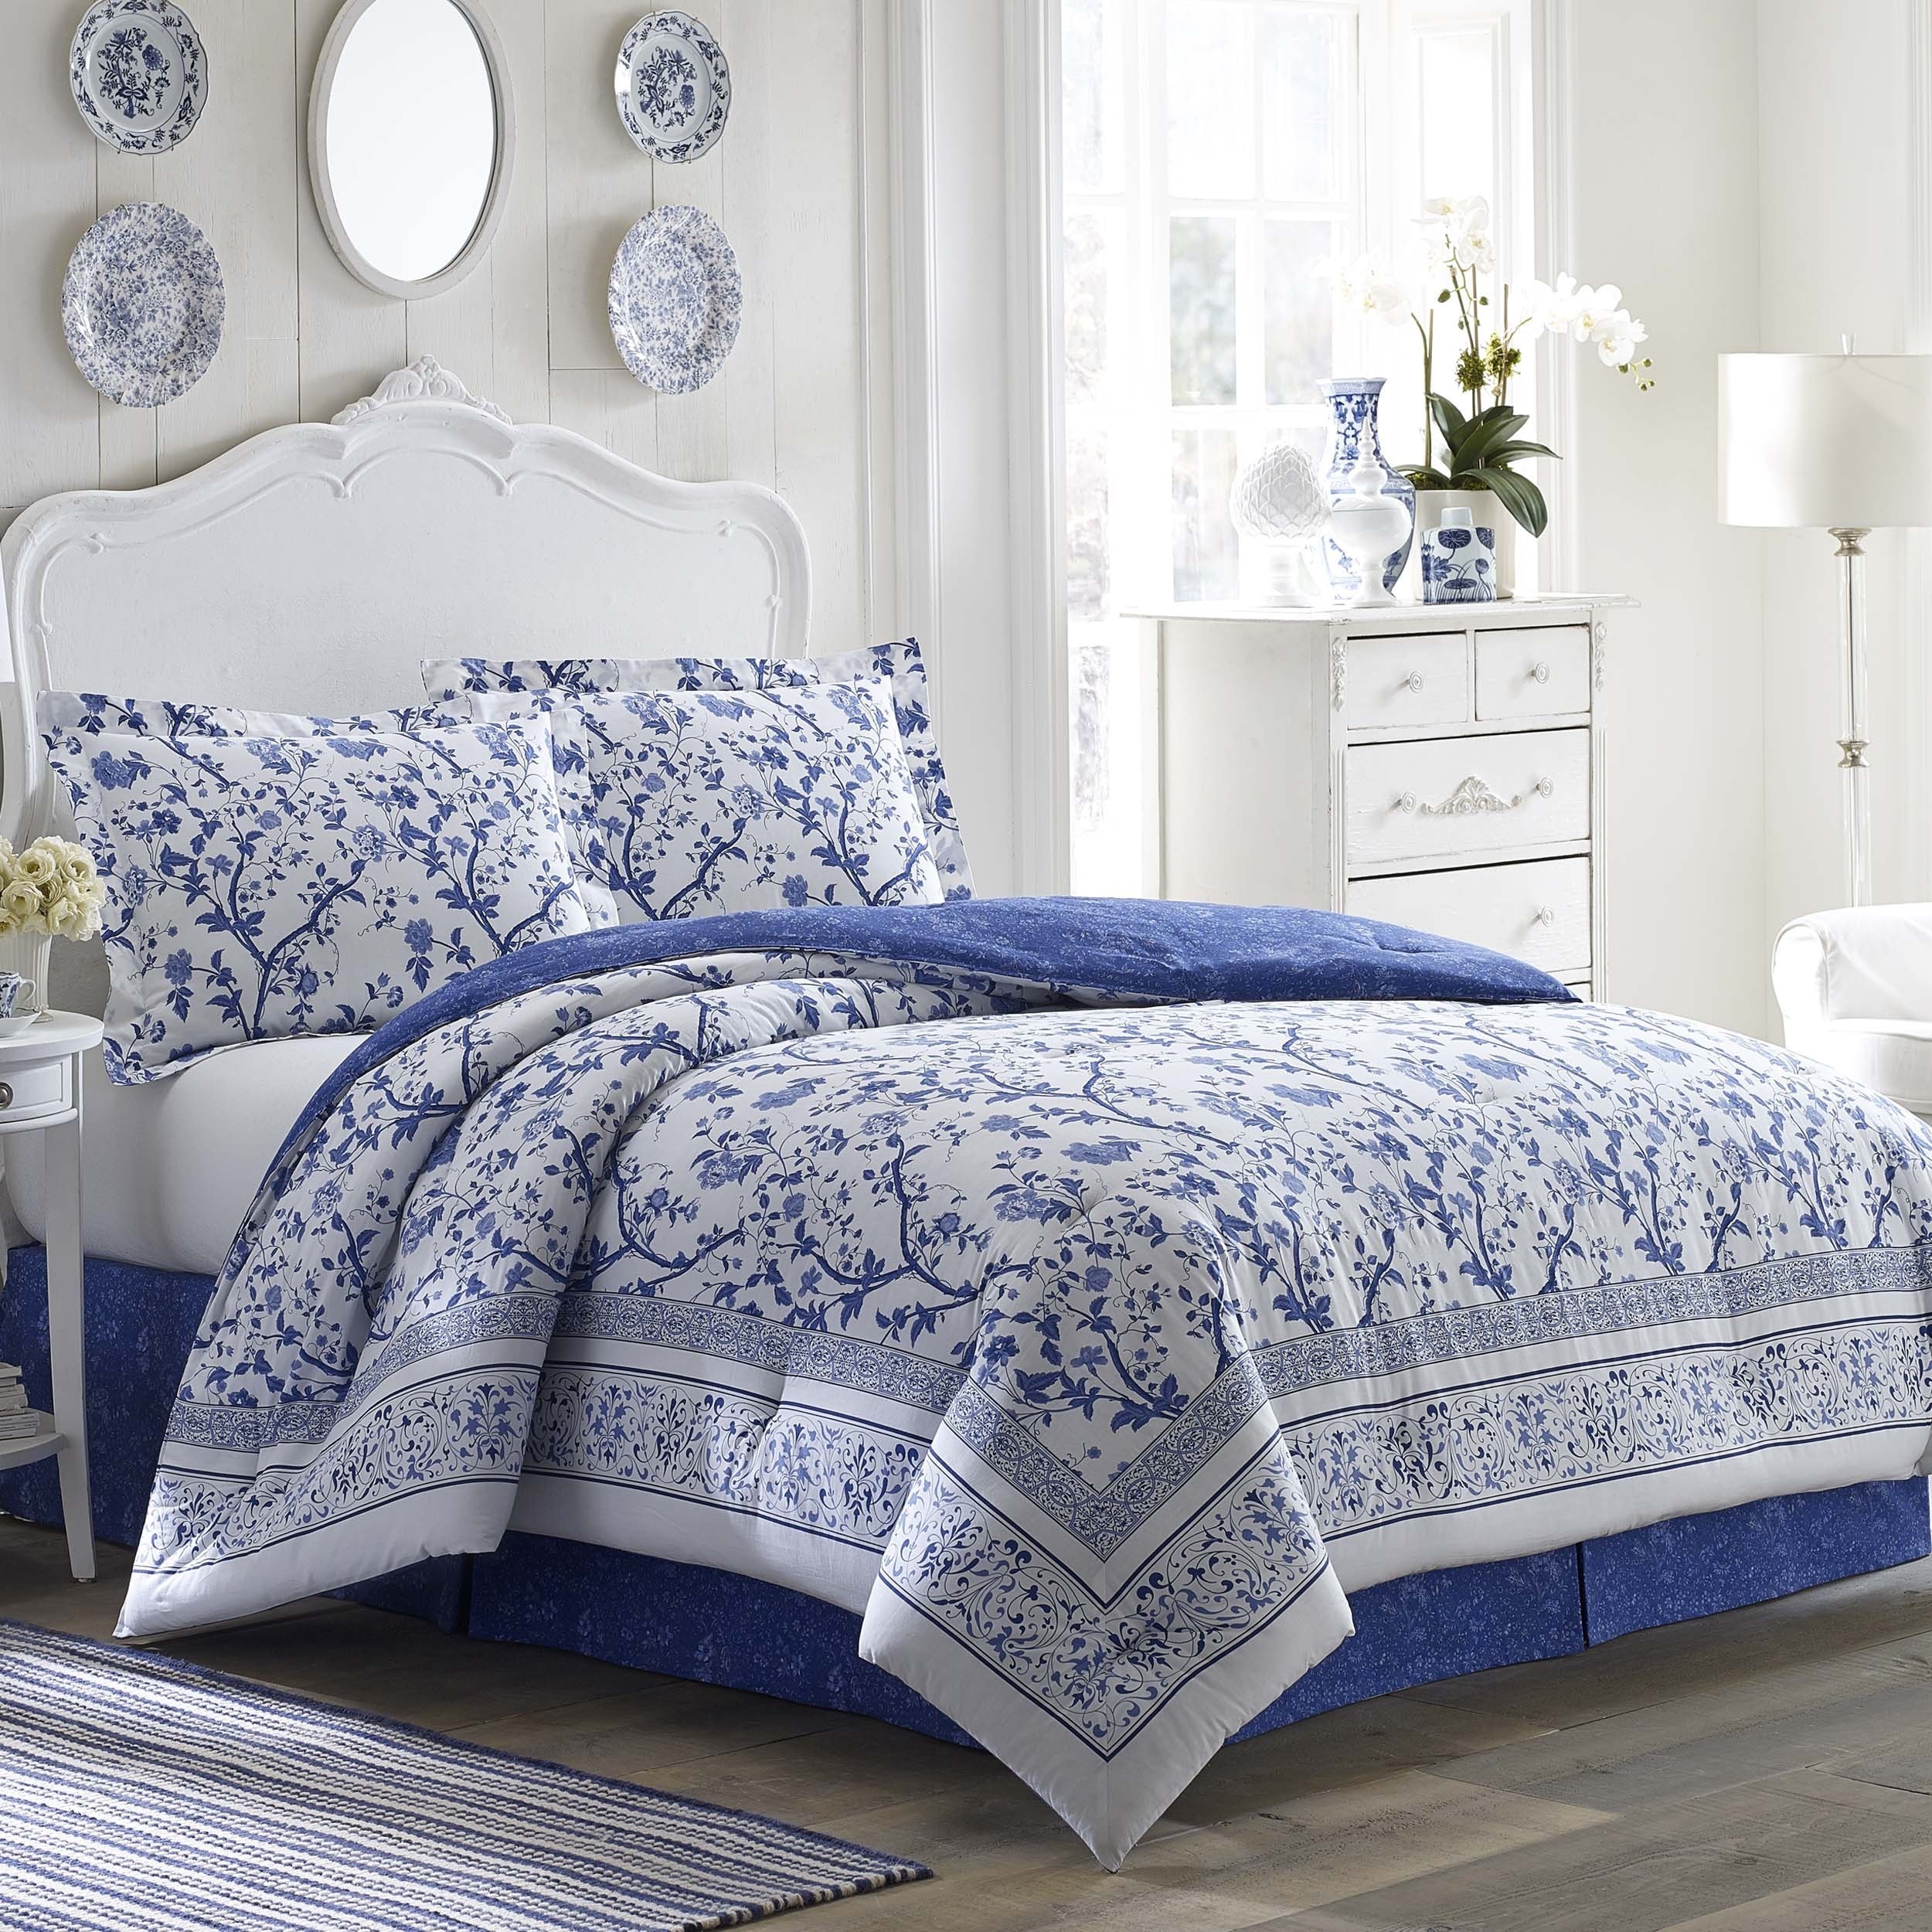 Laura Ashley Charlotte Blue White Floral 4 Piece Comforter Set On Sale Overstock 10628825